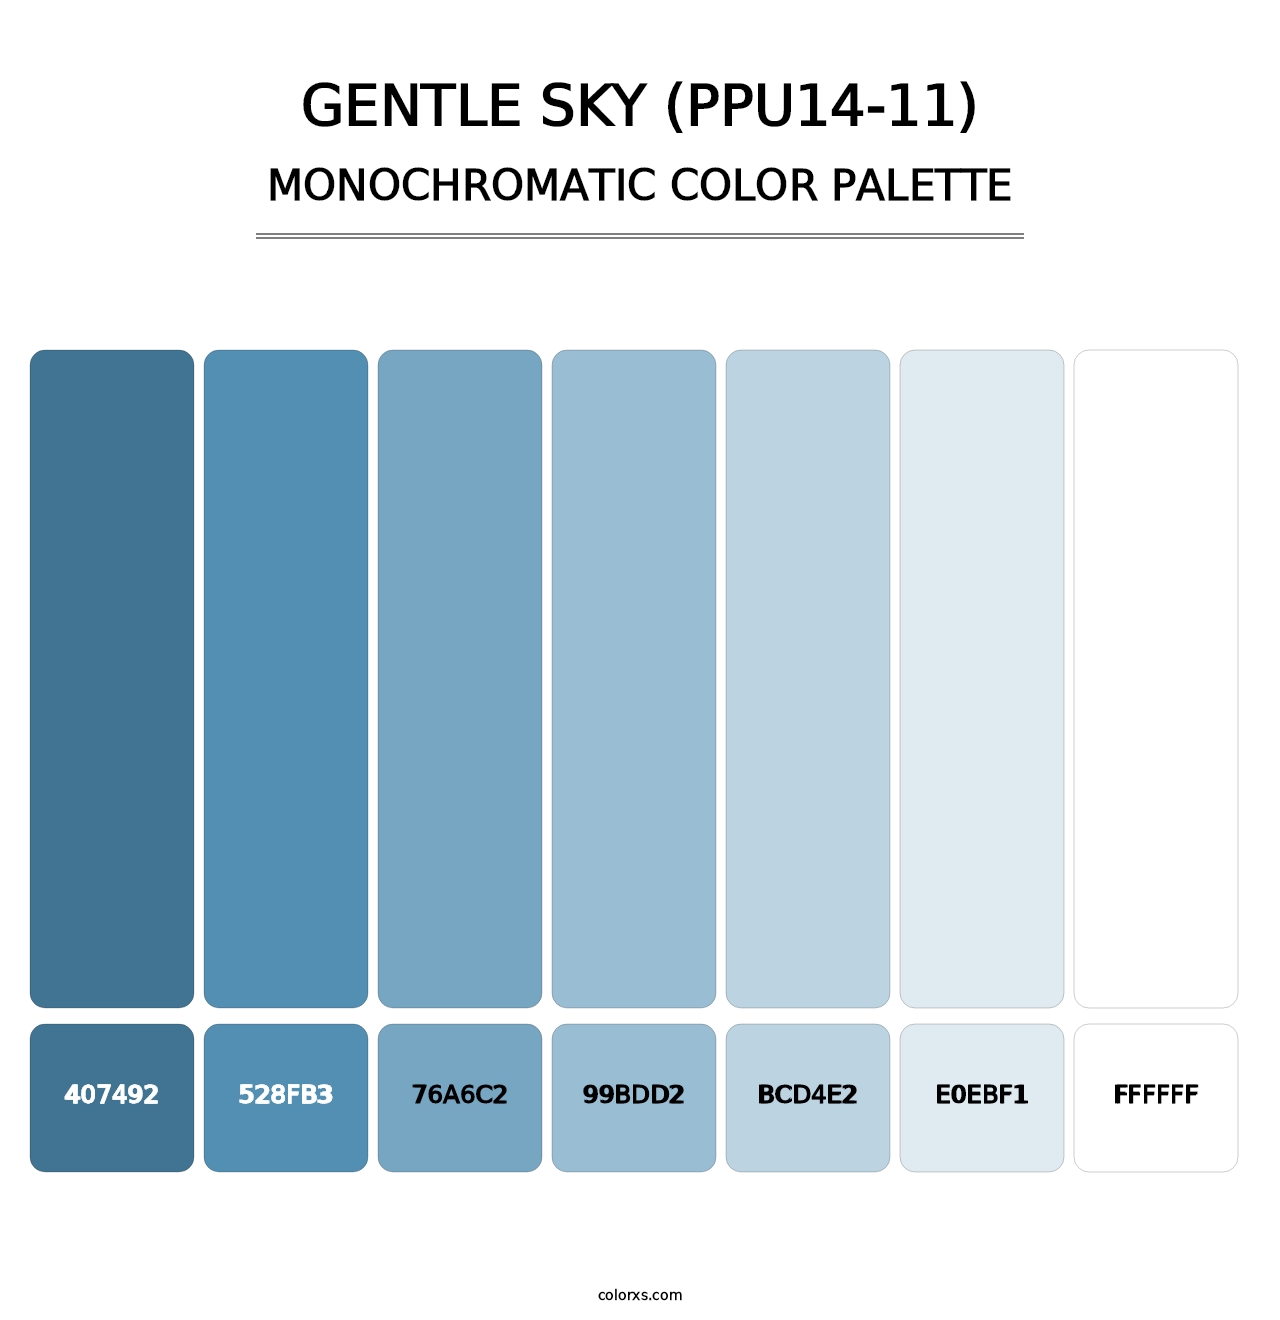 Gentle Sky (PPU14-11) - Monochromatic Color Palette